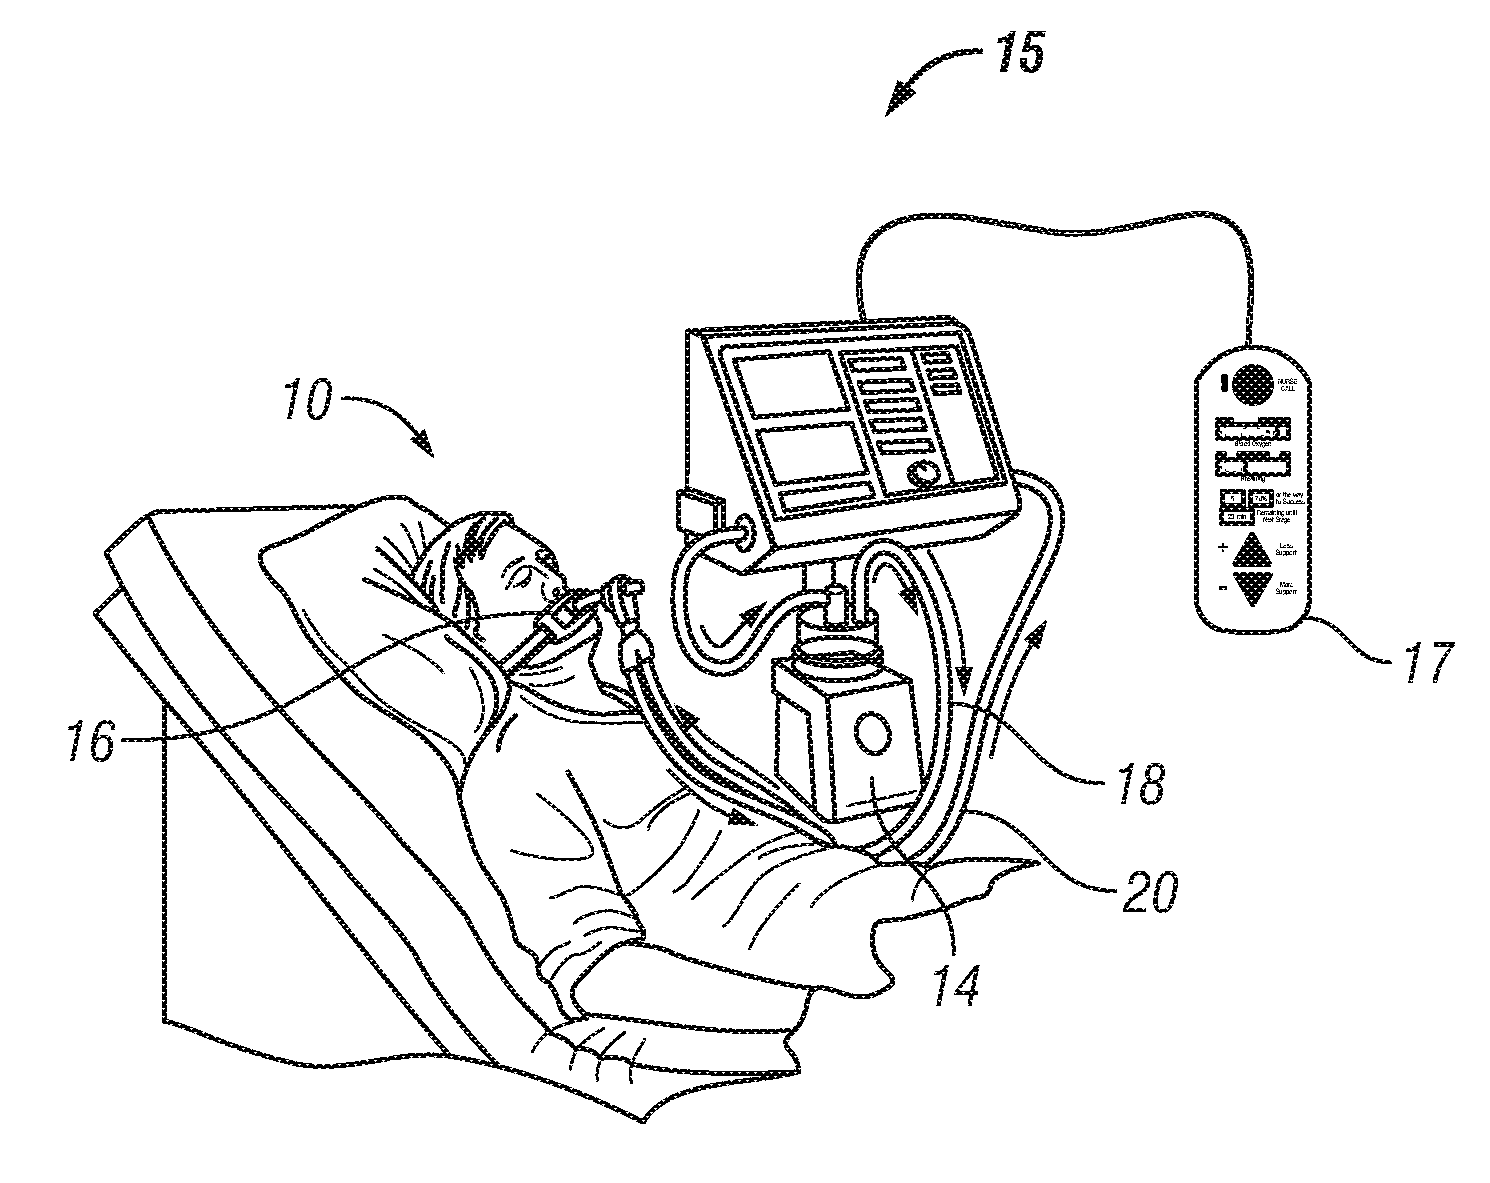 Patient-controlled ventilation